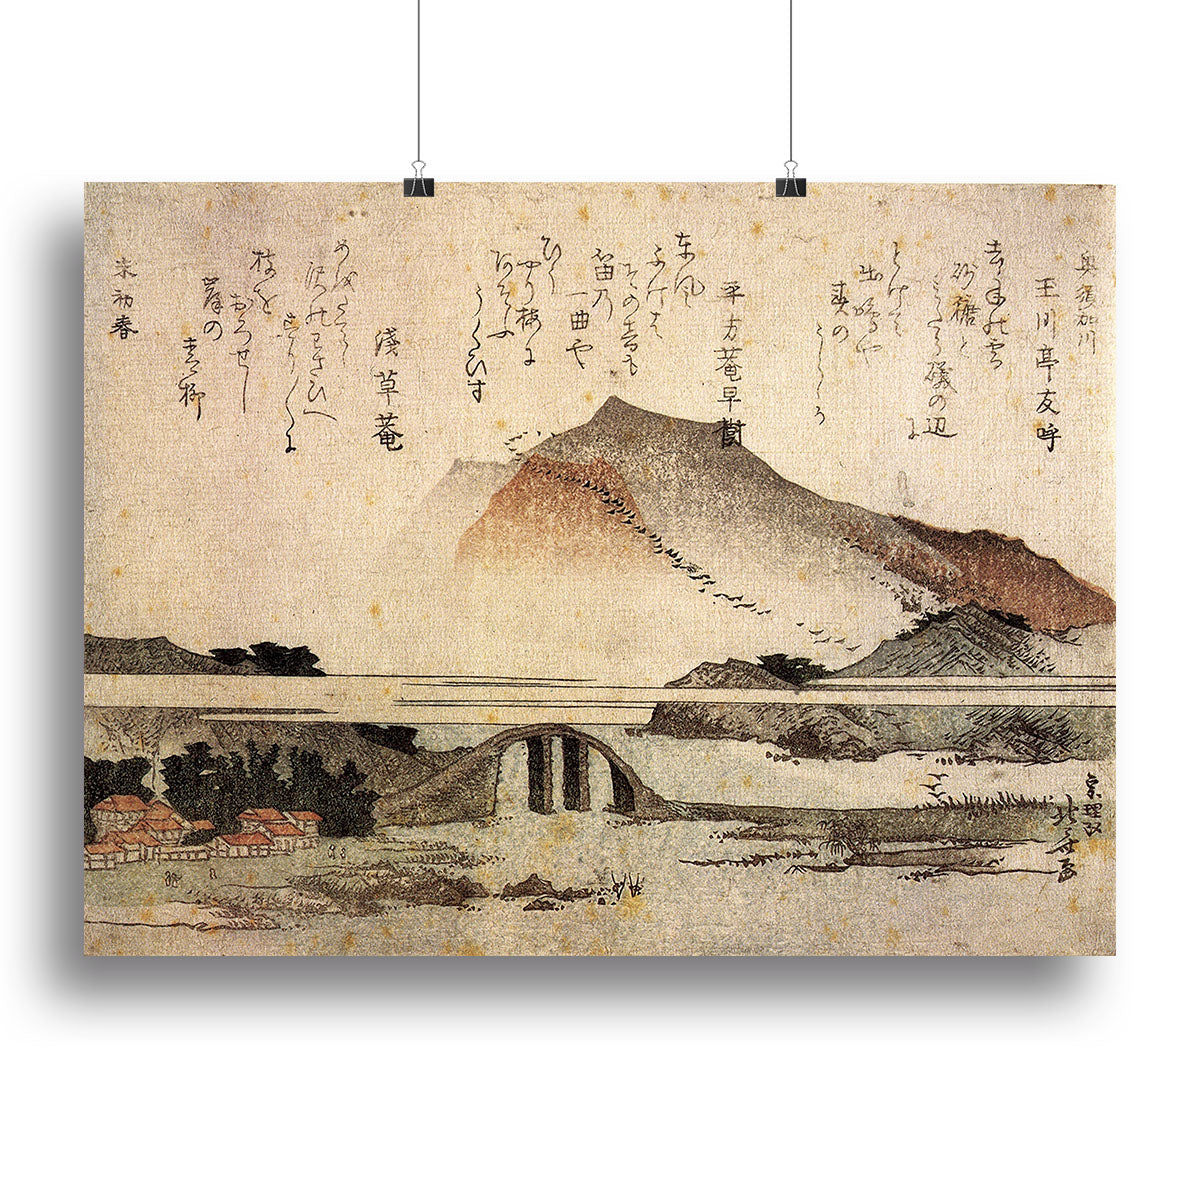 Mountain landscape with a bridge by Hokusai Canvas Print or Poster - Canvas Art Rocks - 2